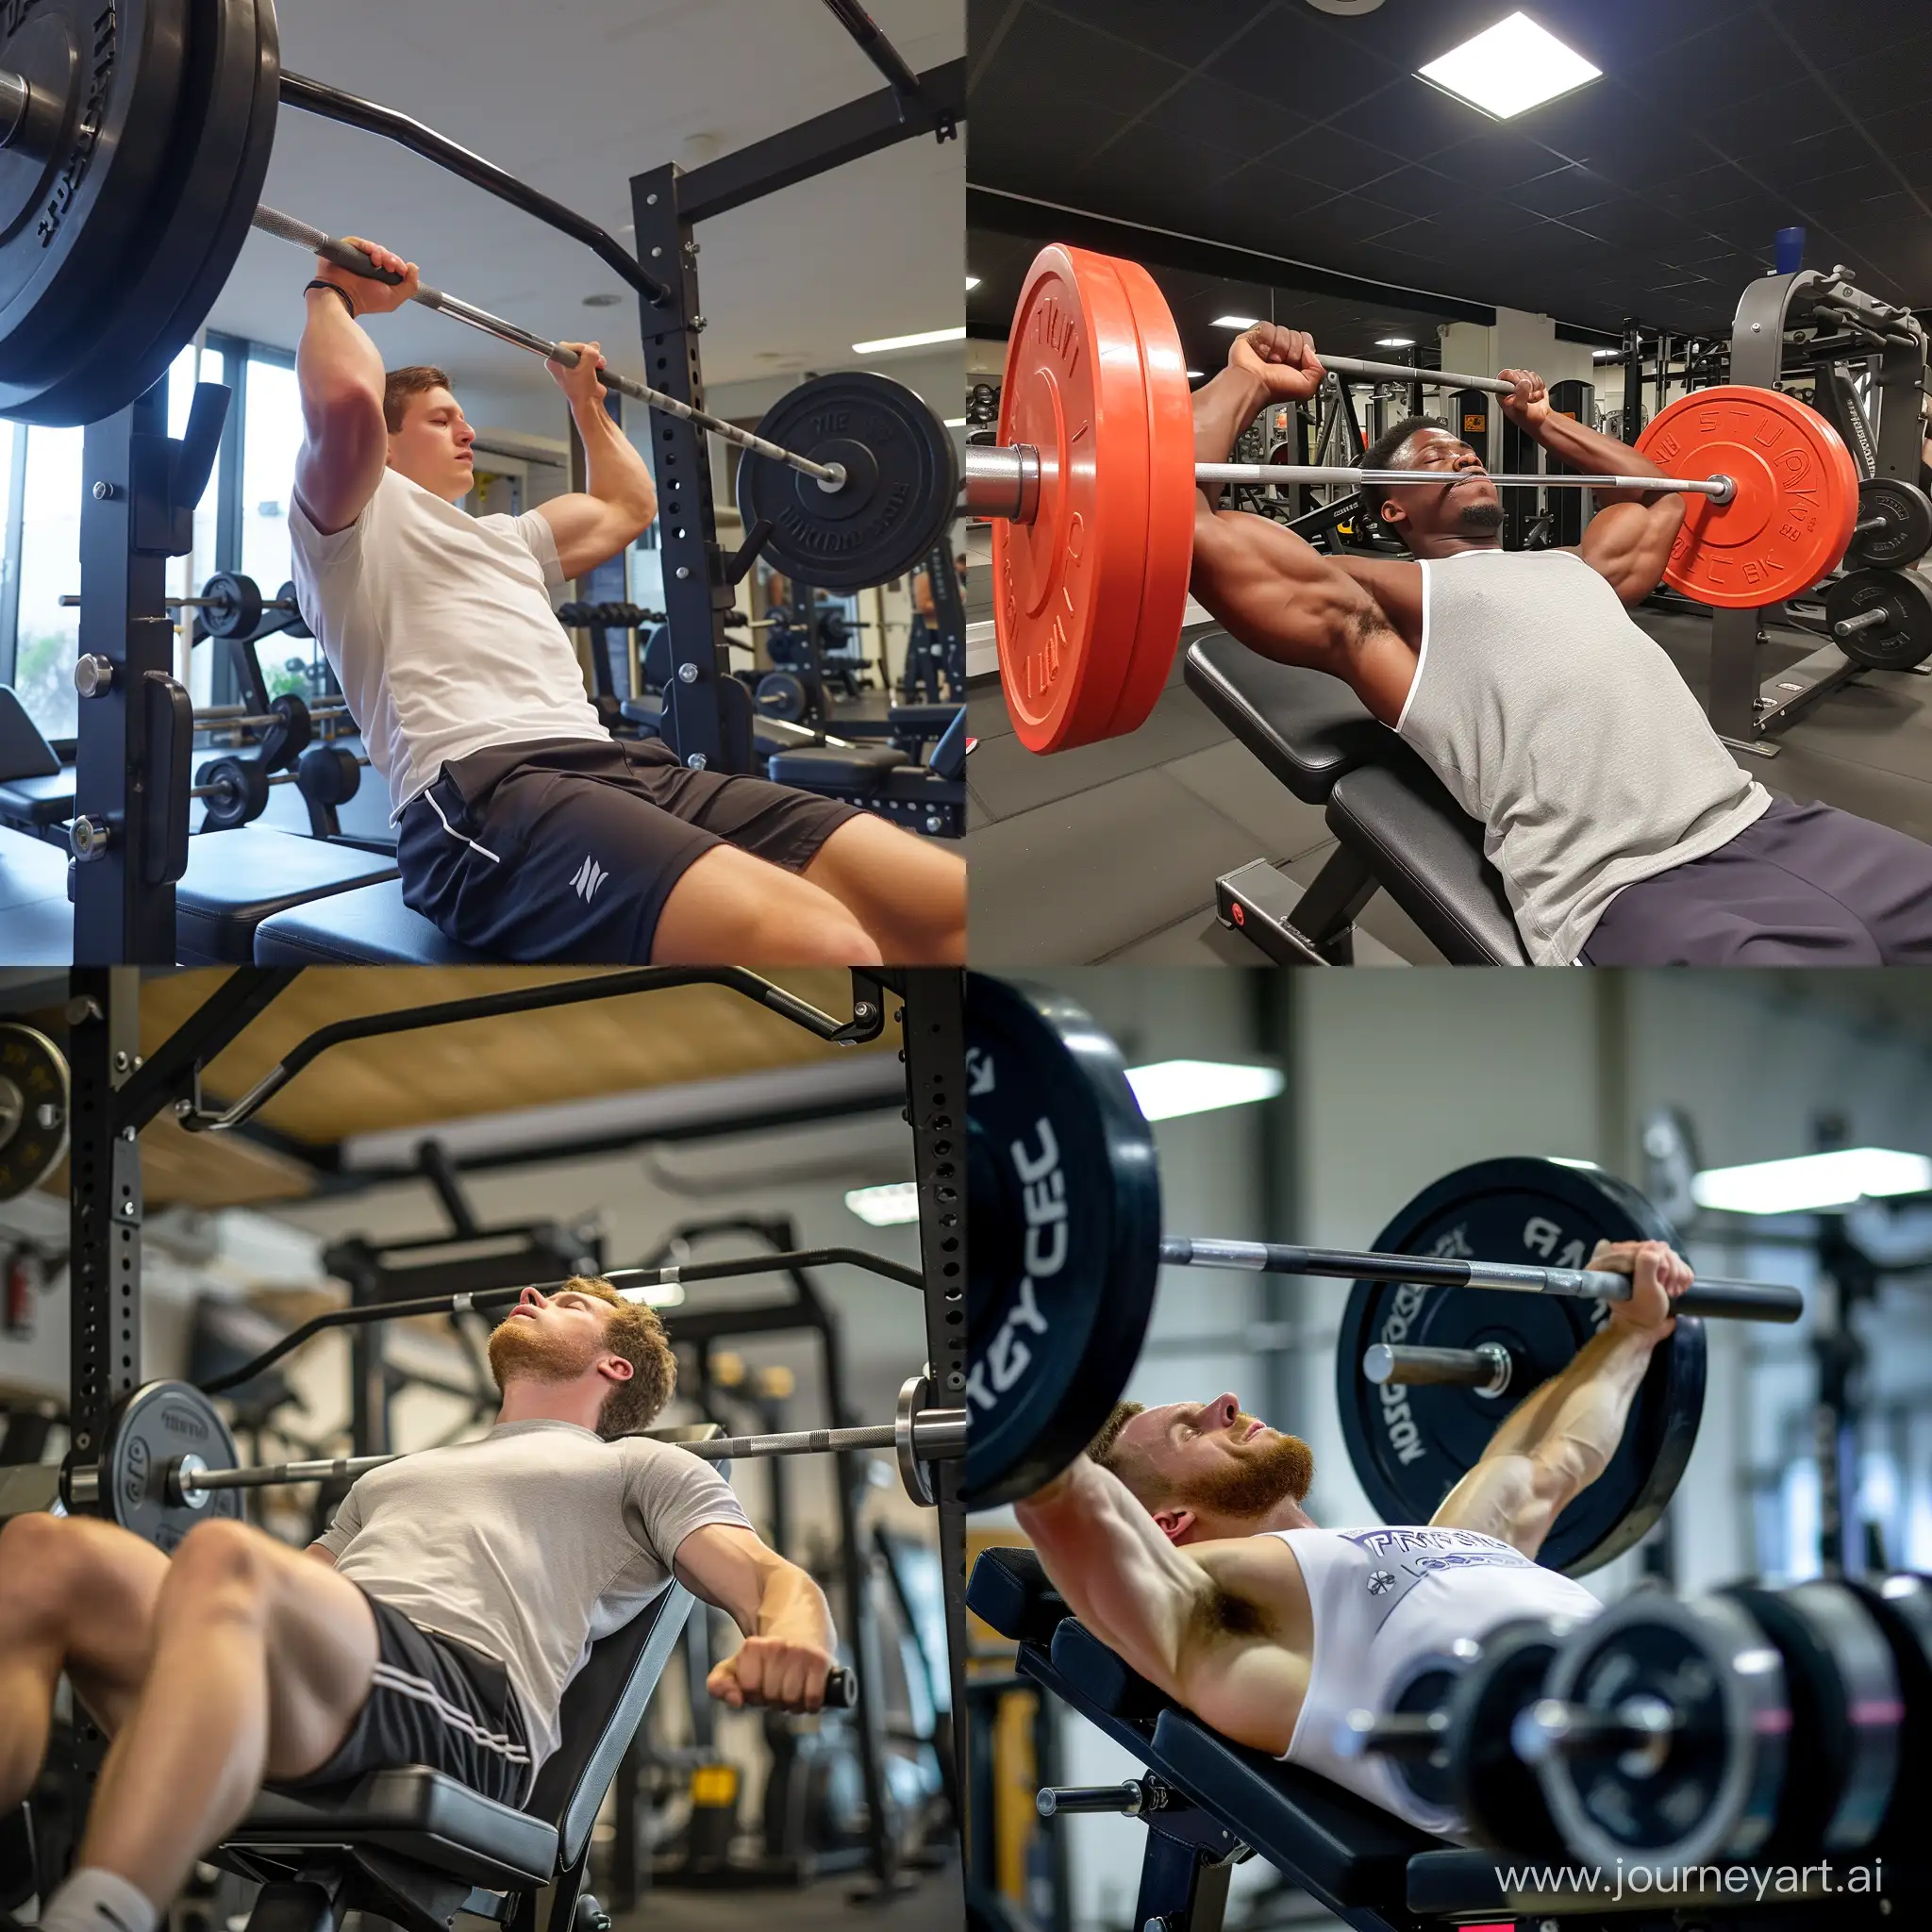 Powerlifting-Marvel-Athlete-Bench-Pressing-500kg-in-Intense-Gym-Session